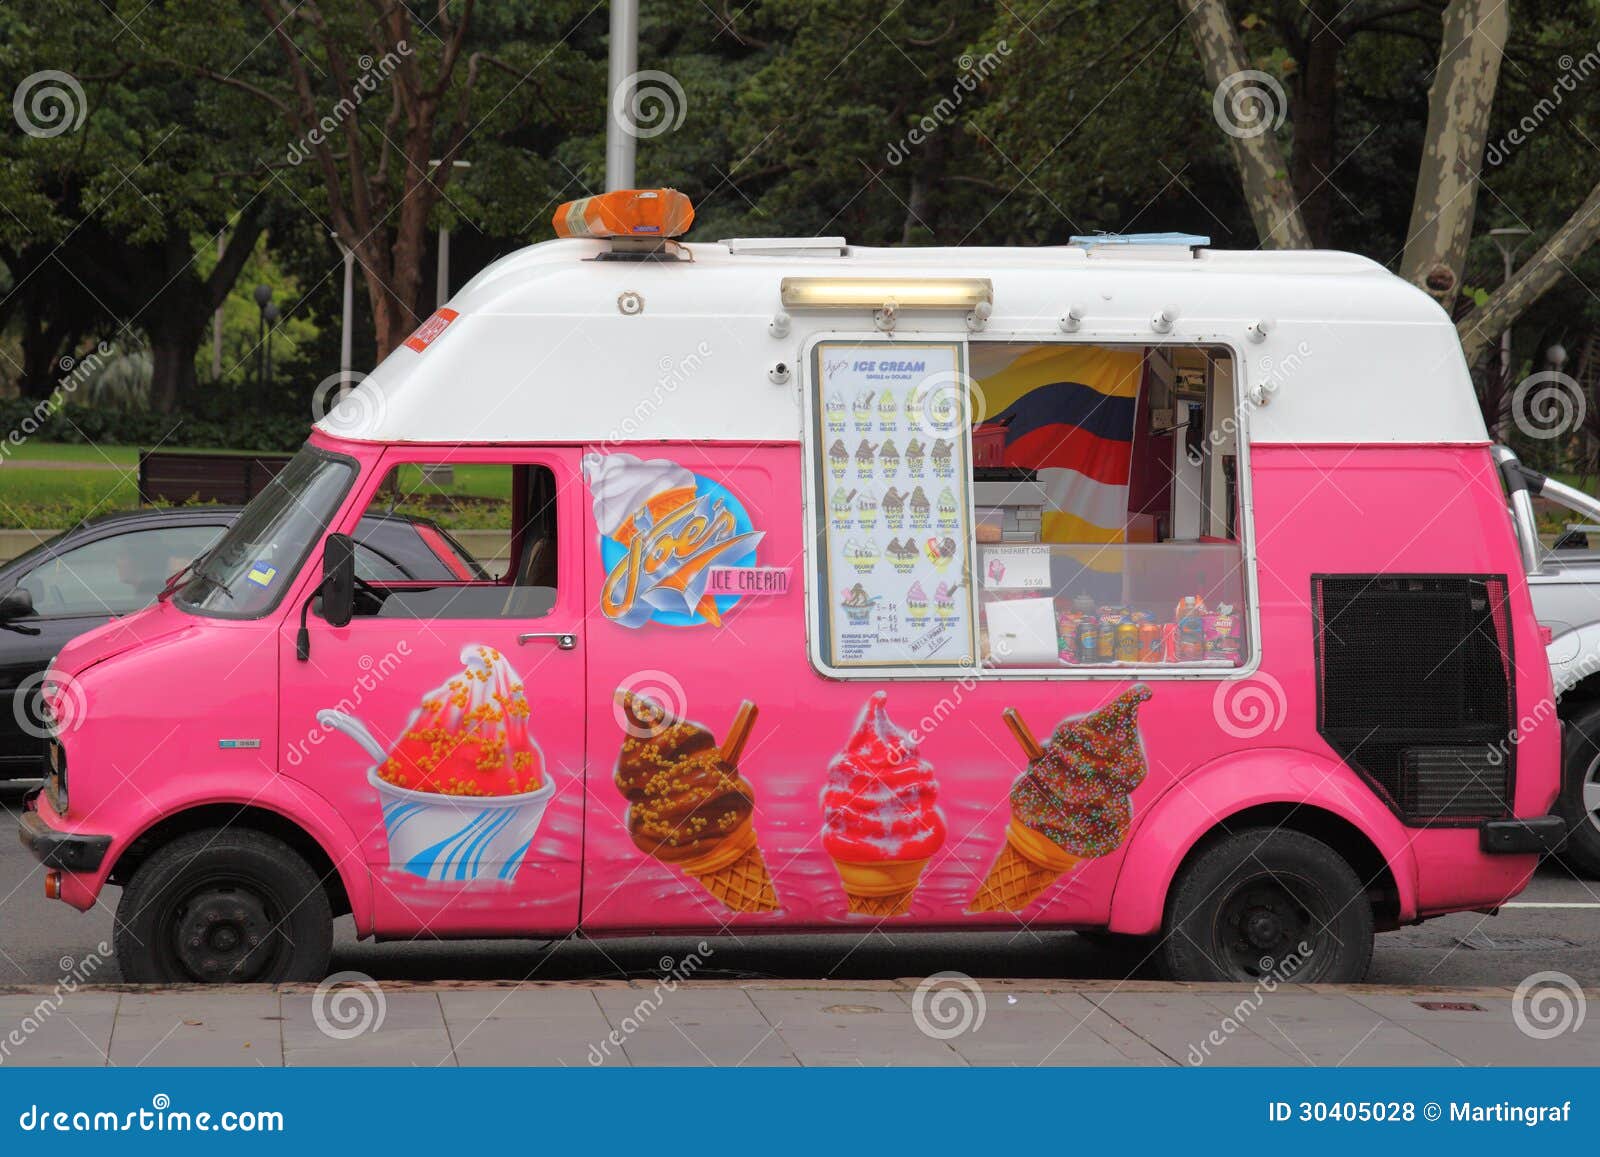 ice cream van truck full window 